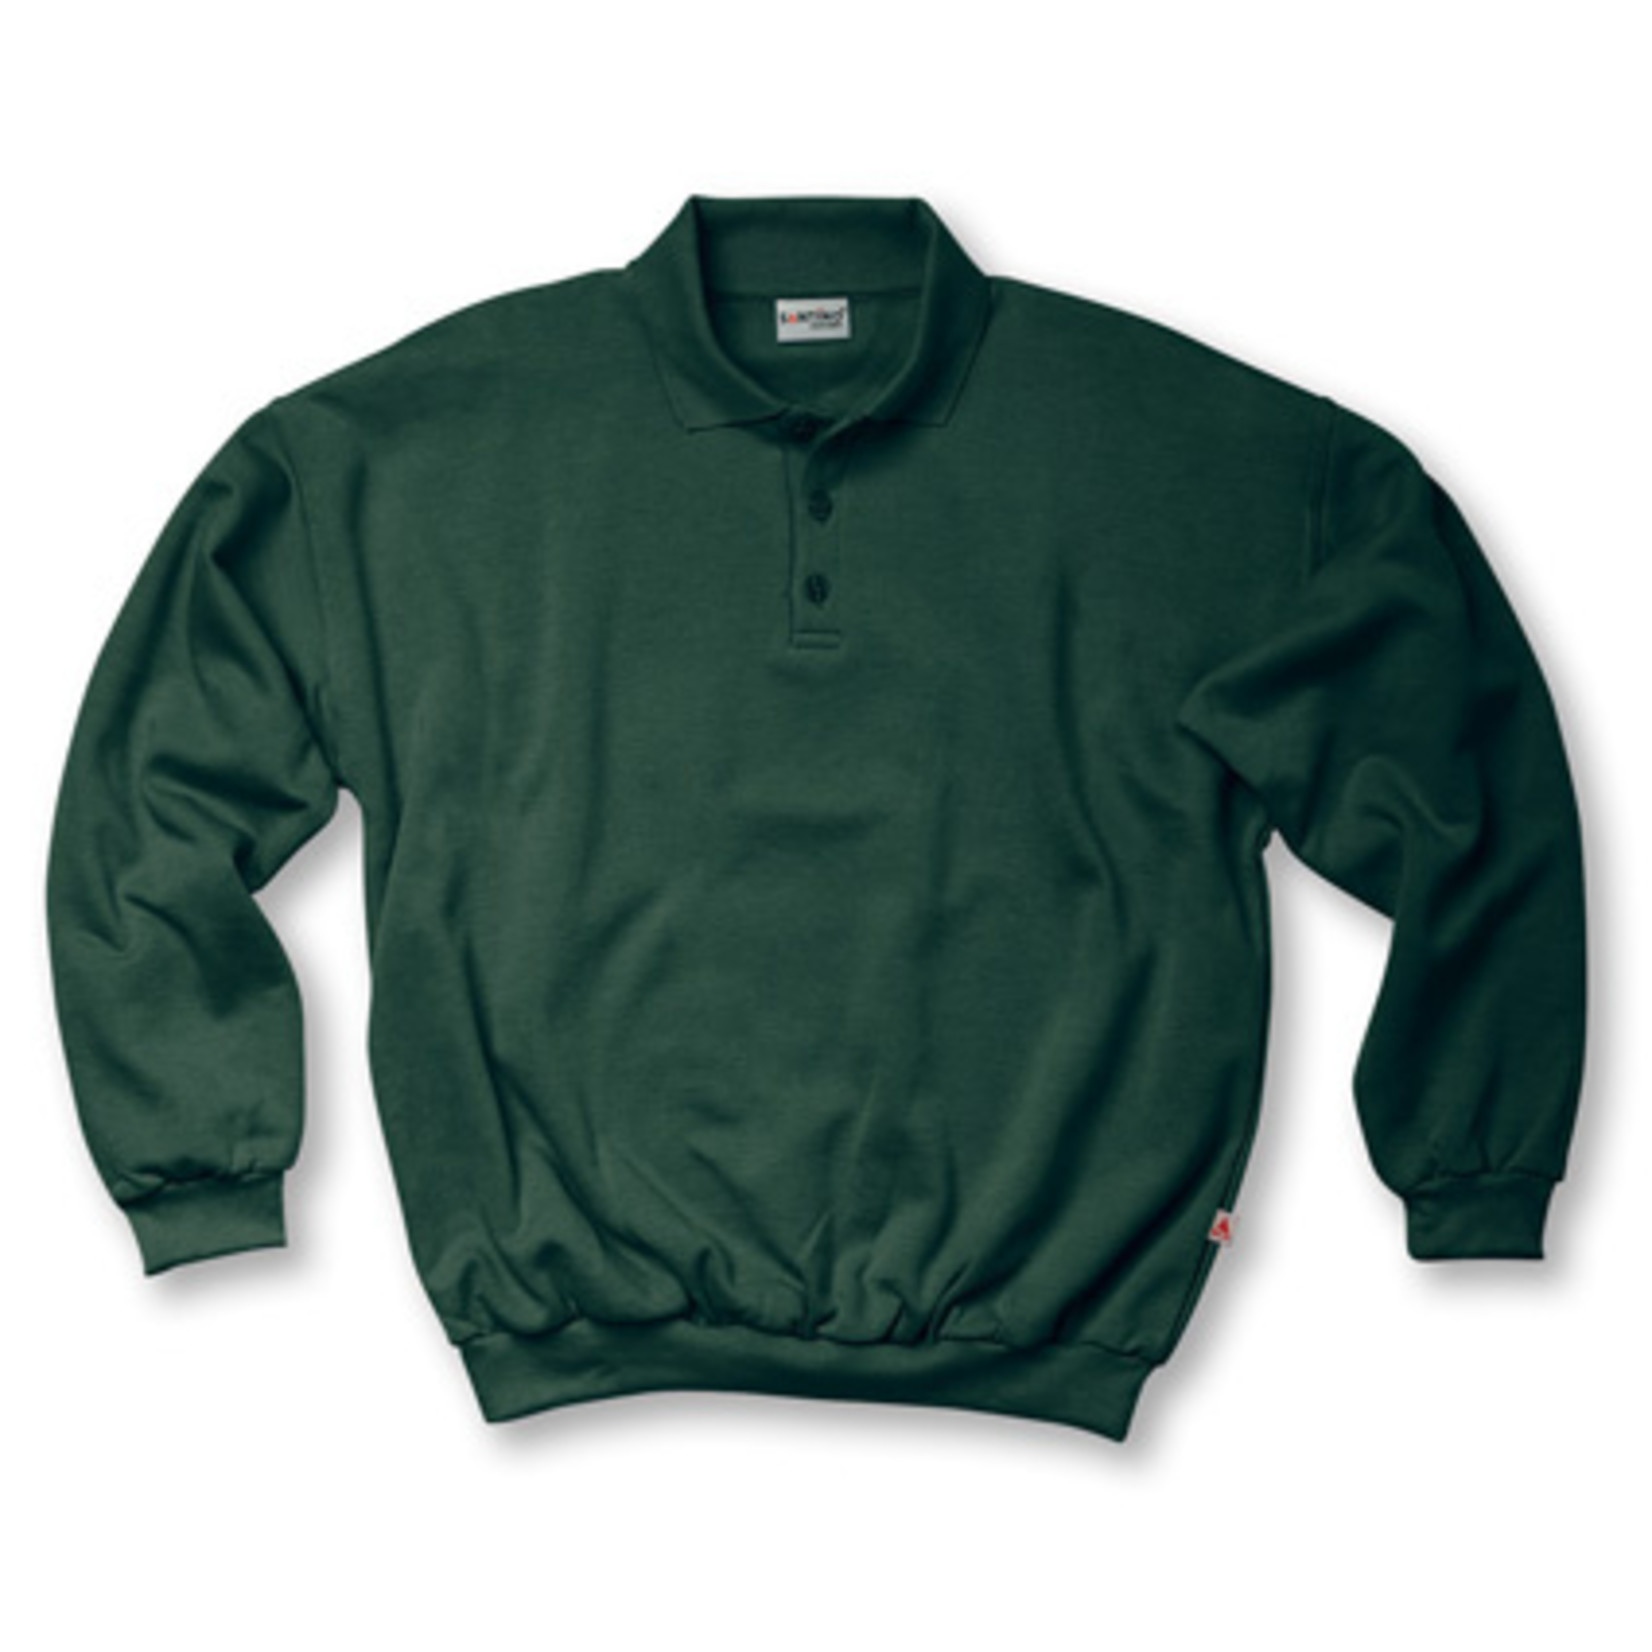 Santino Sweater, polokraag groen